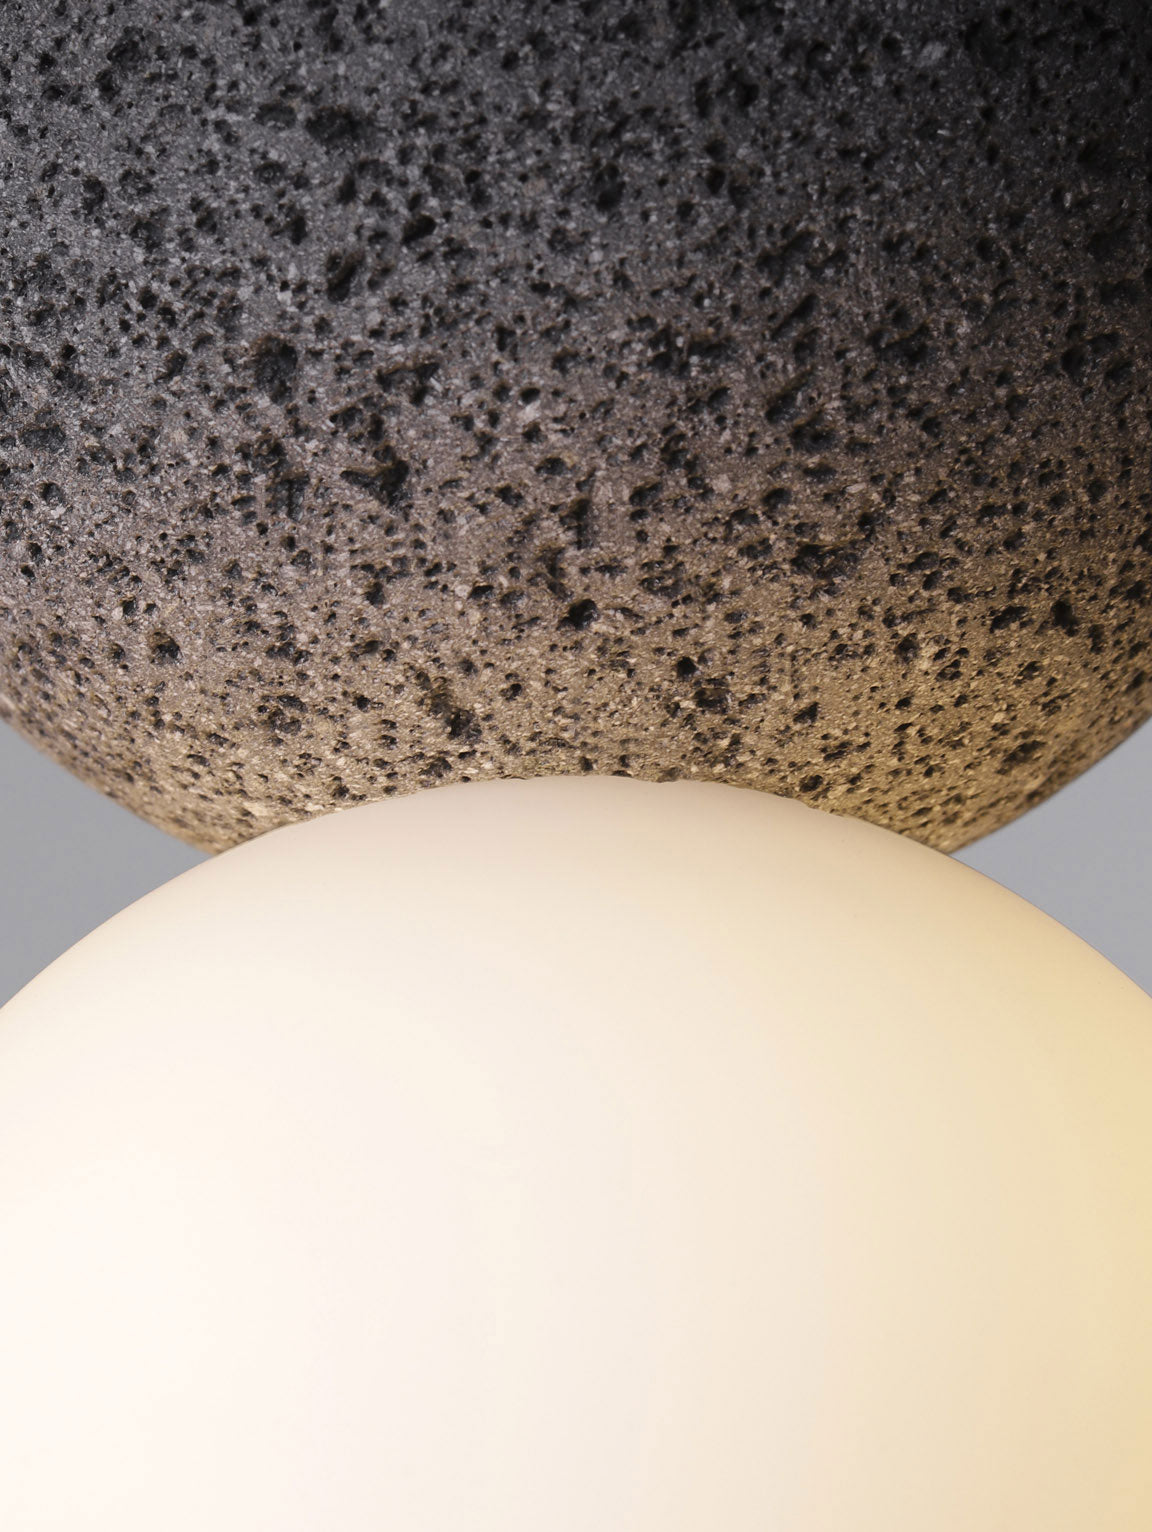 ORIGO I Lava Pendant by David Pompa - $1,074.15